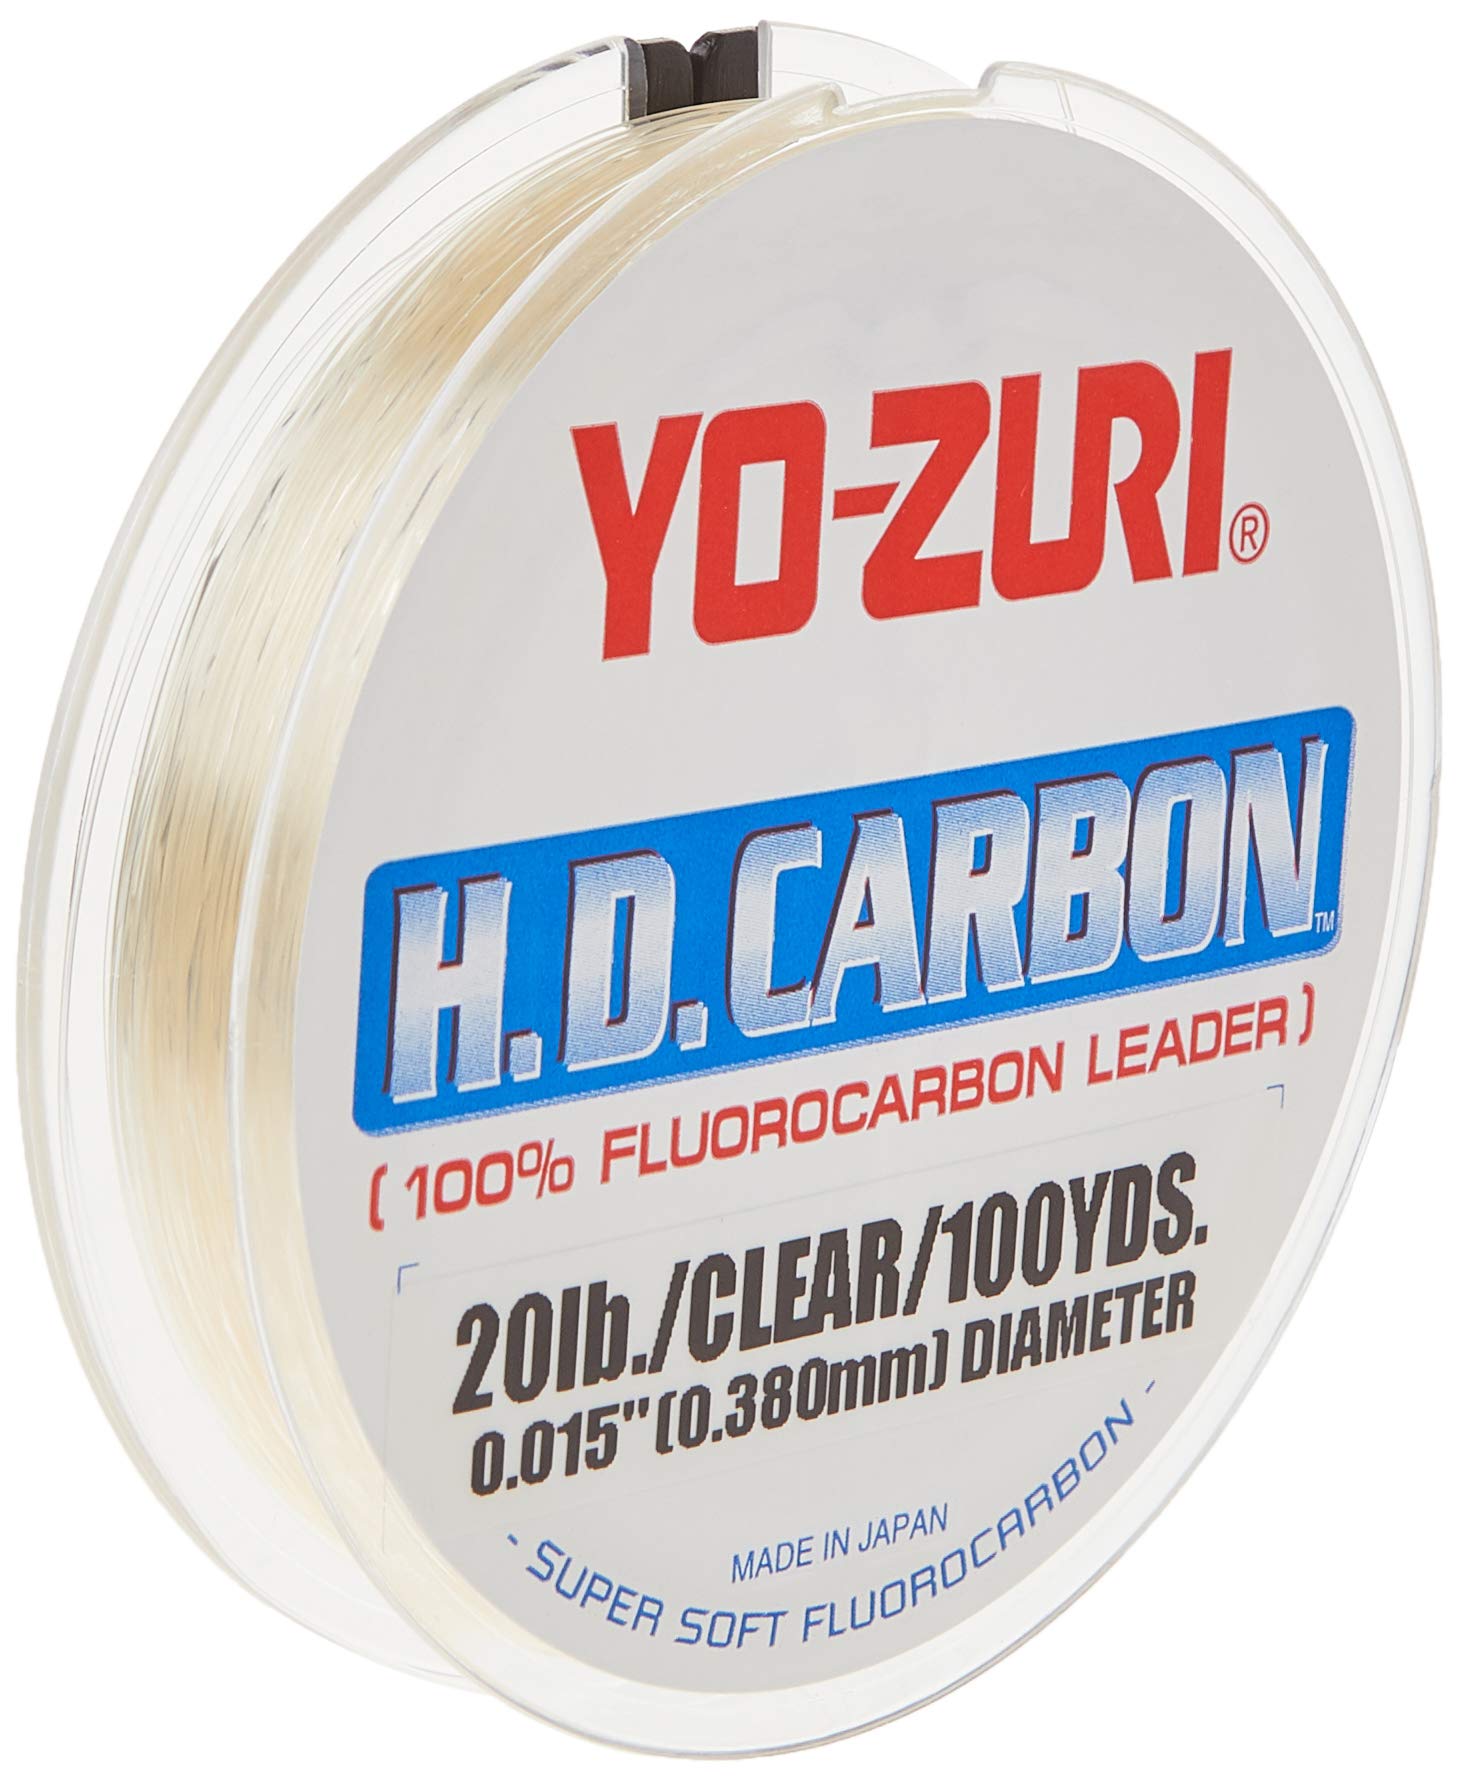 Yo-Zuri H.D. Carbon Fluorocarbon Leader Line 30-Pound/30-Yard Multi